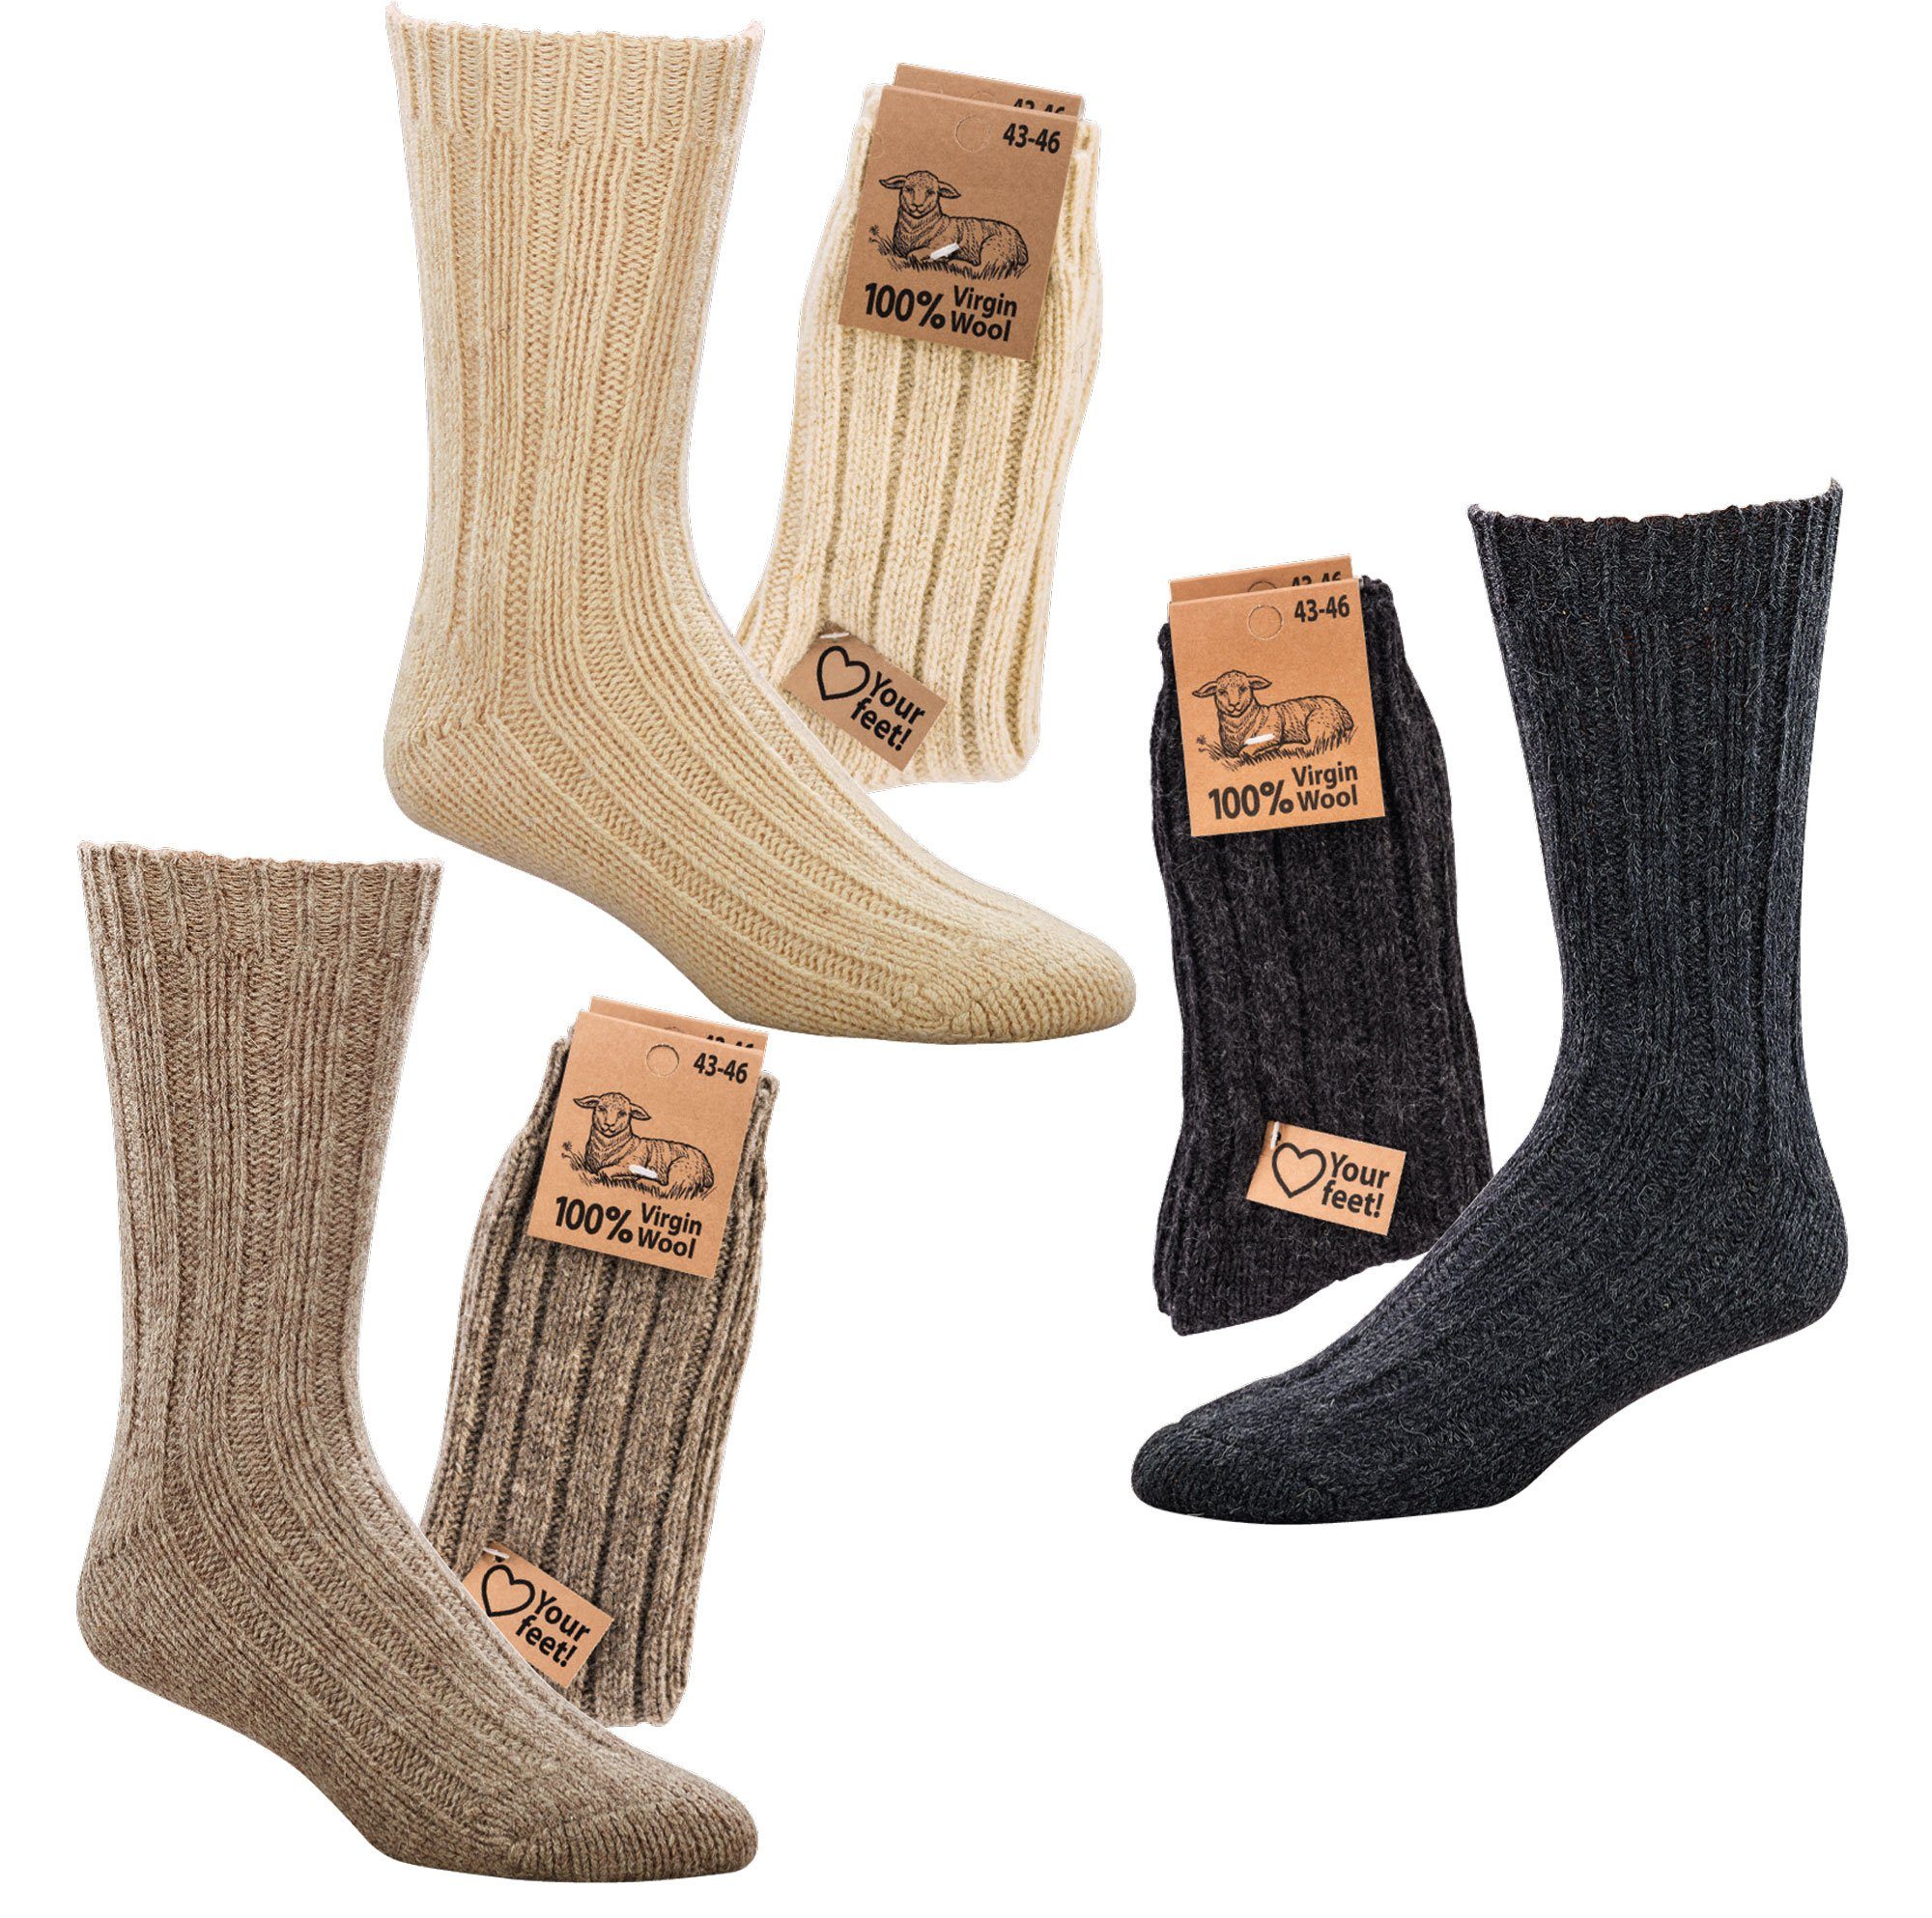 Wowerat Socken Warme Wollsocken 100% "Virgin Wool" Grobstrick Schafwolle (2 Paar) natur